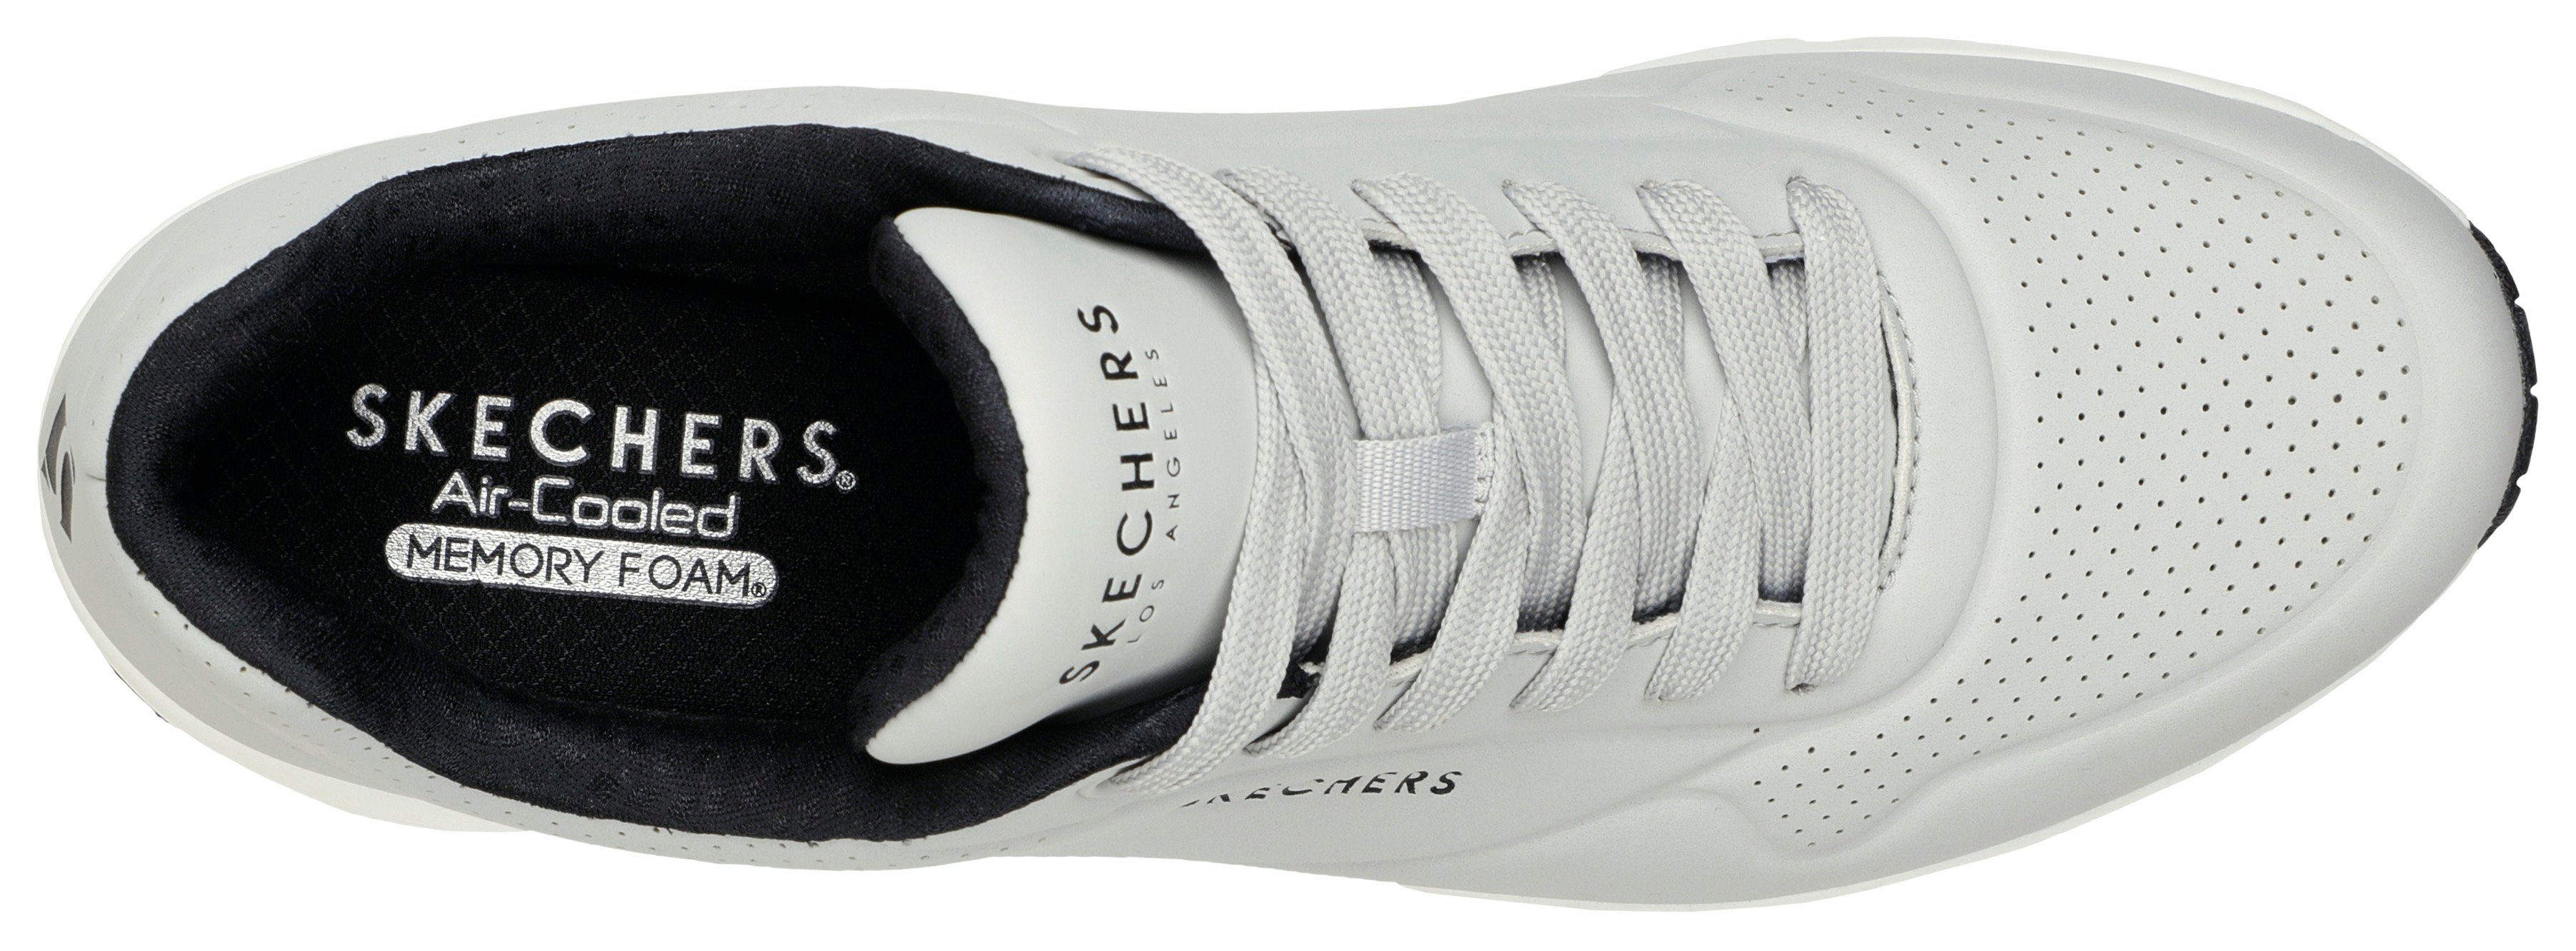 Sneaker Foam Uno Air-Cooled hellgrau-schwarz mit Skechers Memory